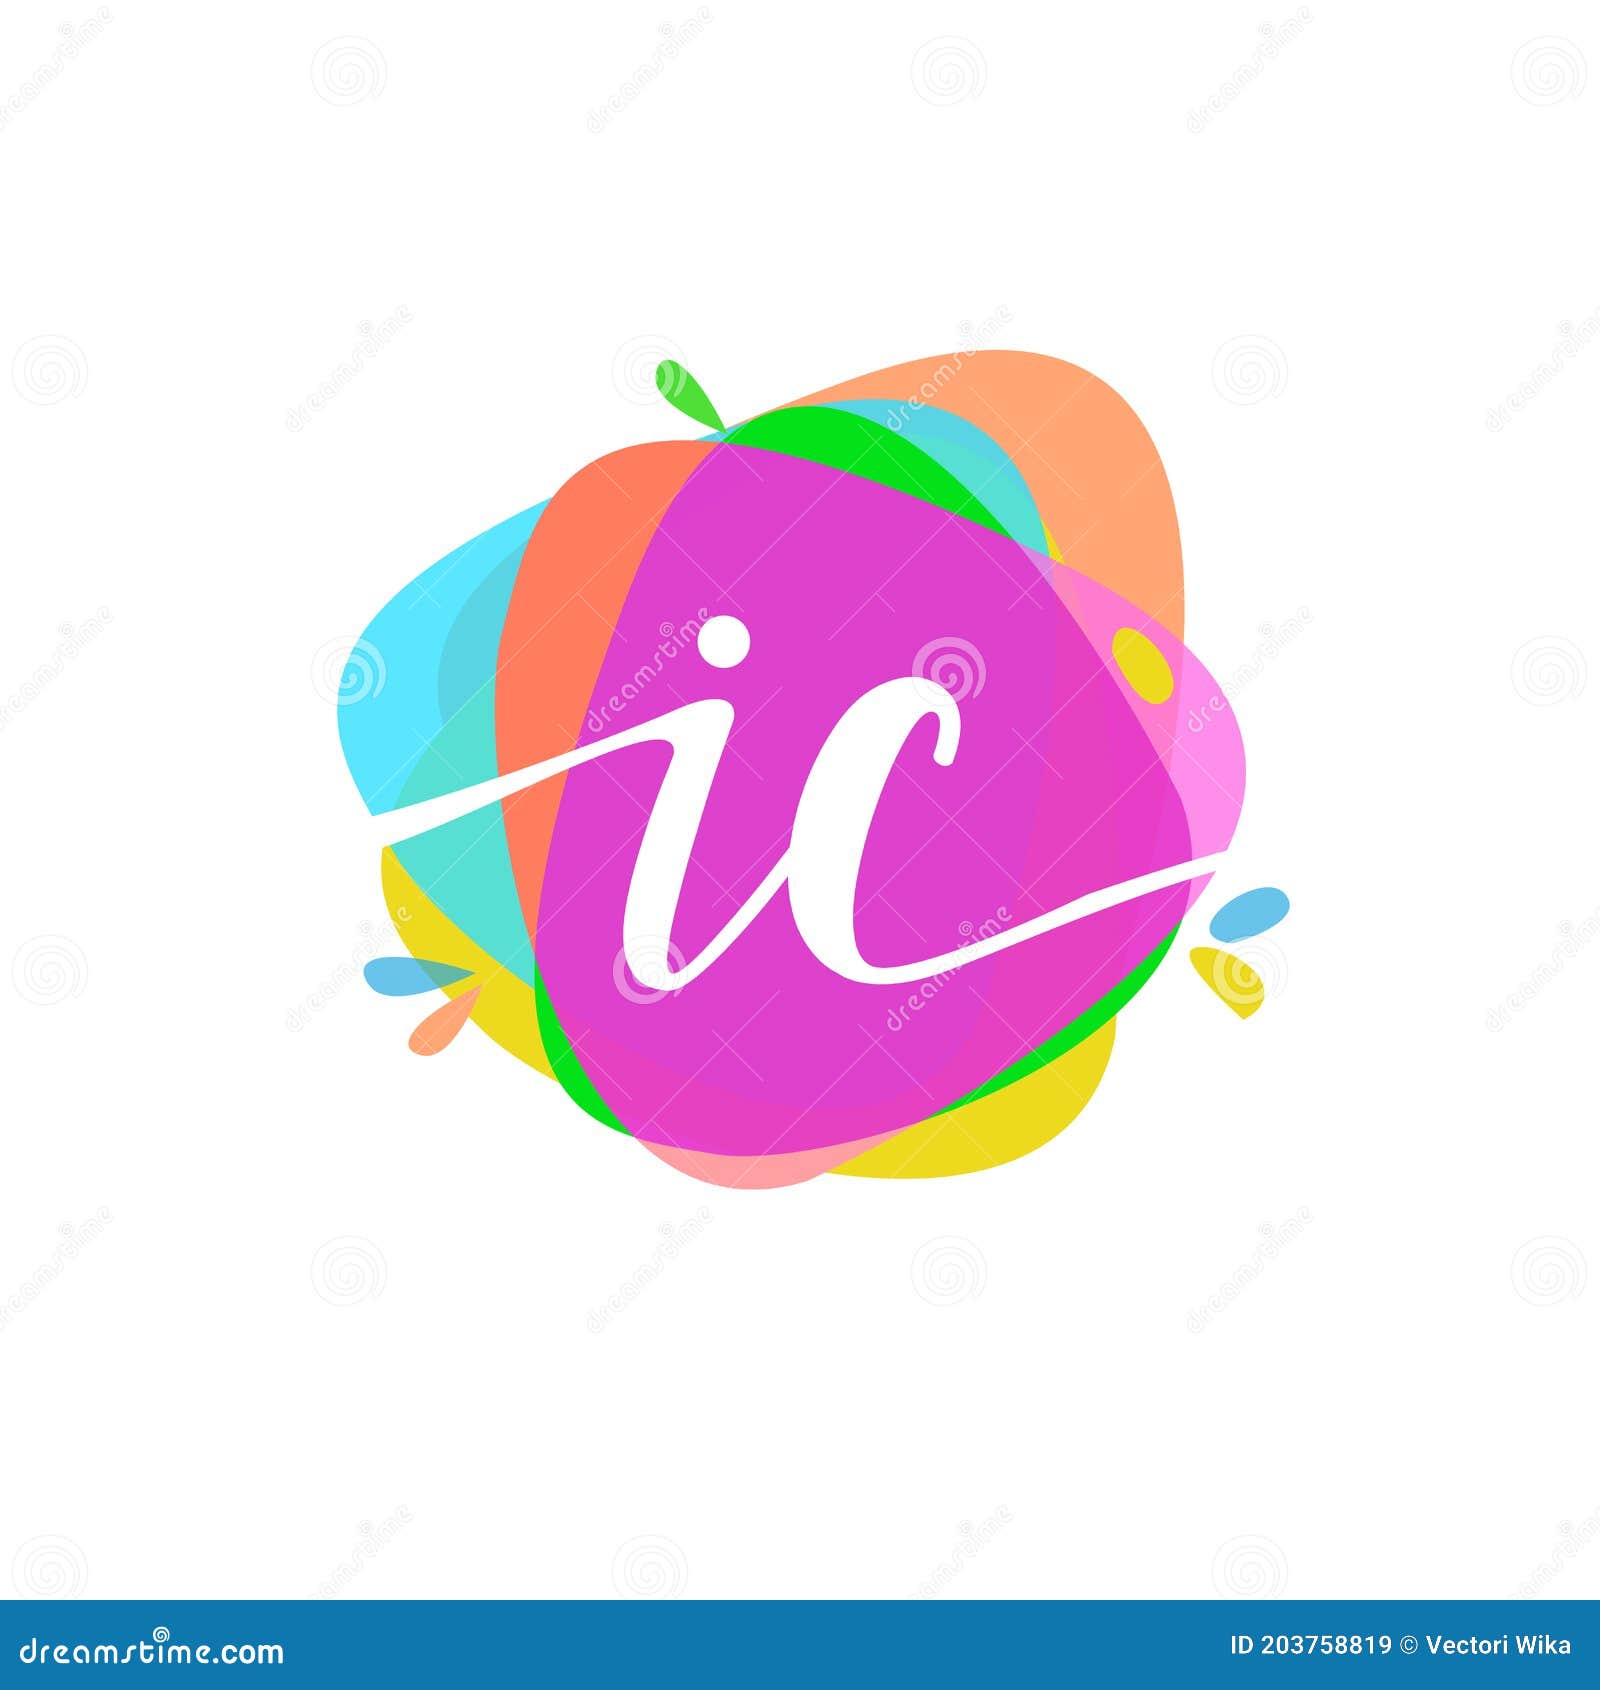 Ic logo Stock Photos, Royalty Free Ic logo Images | Depositphotos